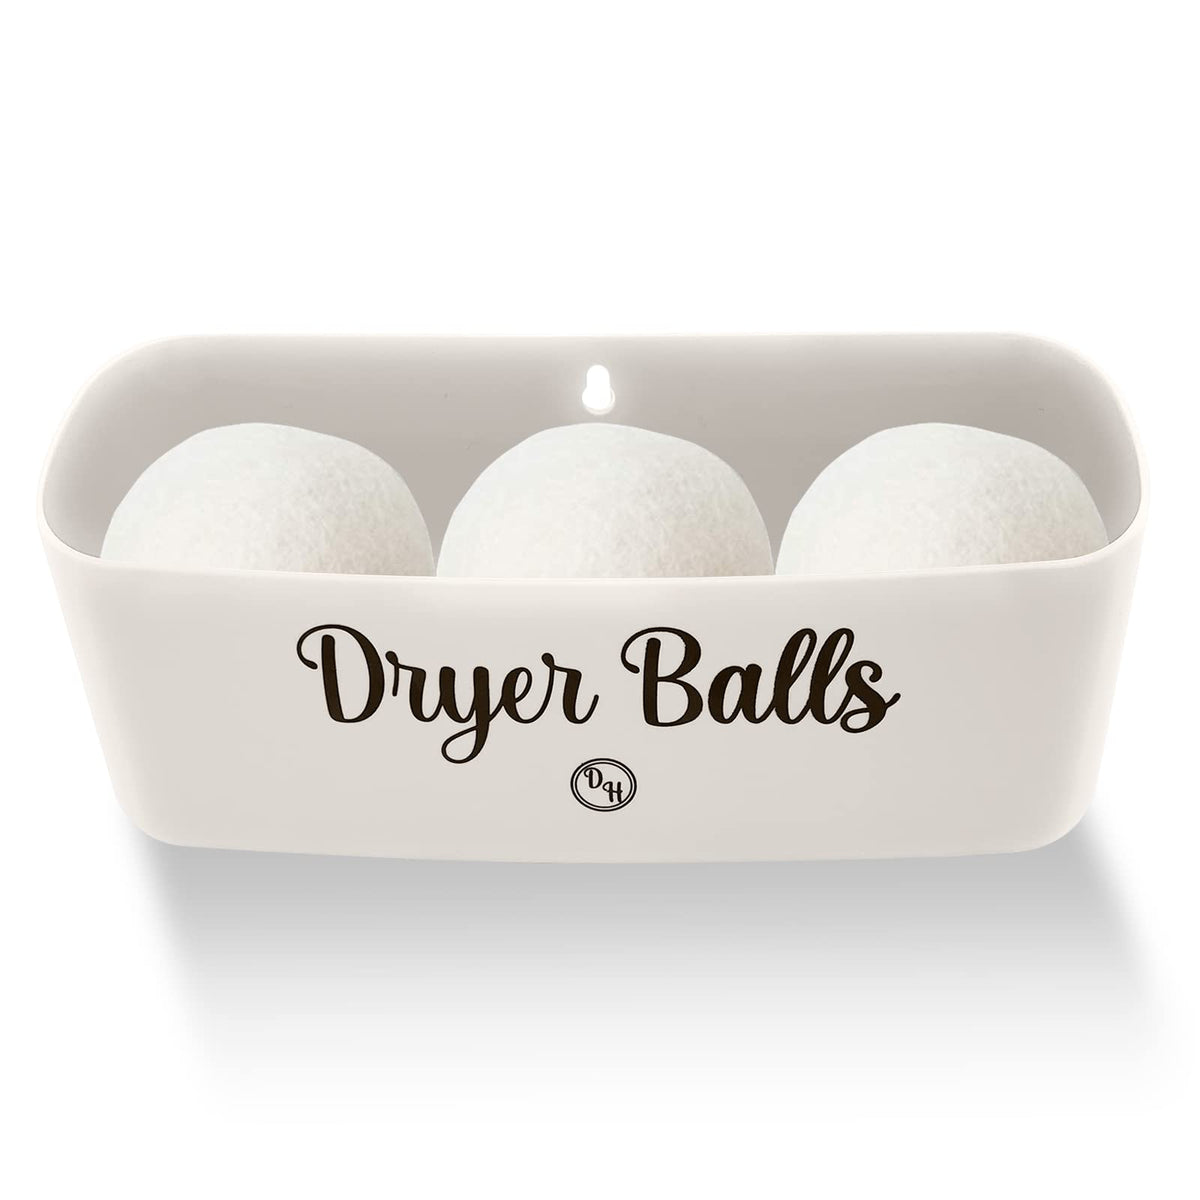 Laundry Dryer Balls Magnetic Bin Organizer Holder for Washer Fits Wool Dryer Ball Basket